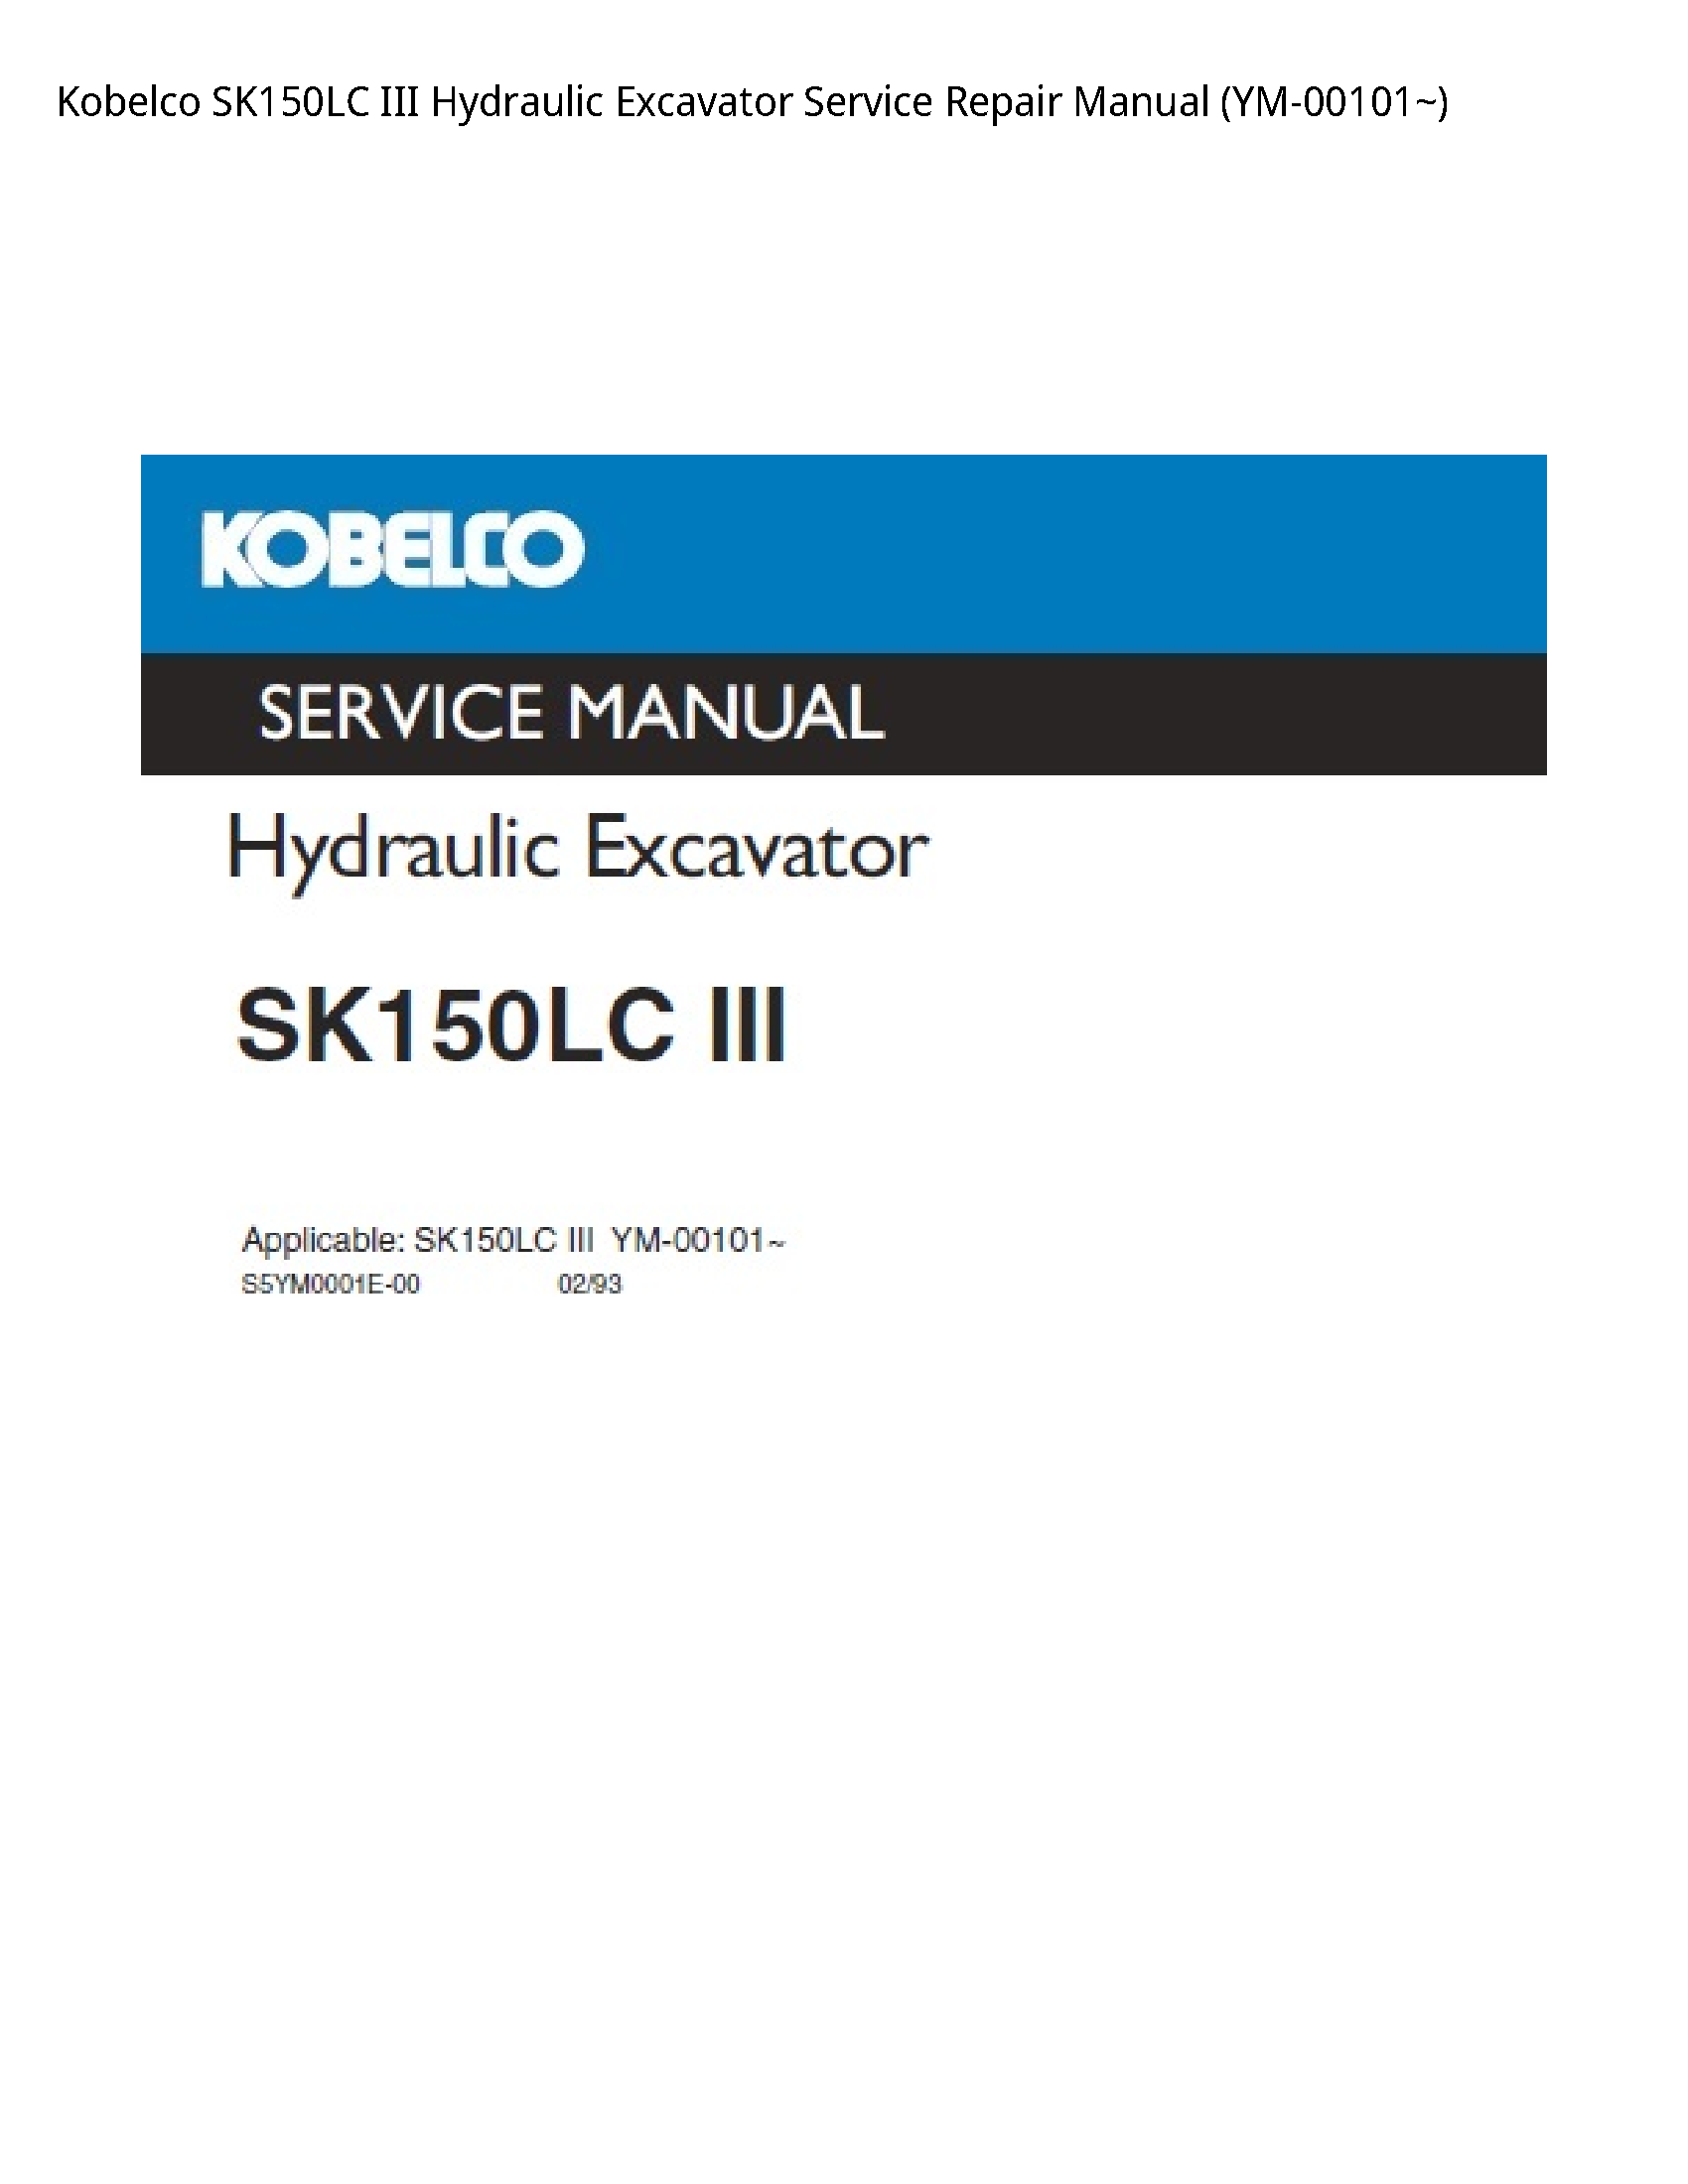 Kobelco SK150LC III Hydraulic Excavator manual